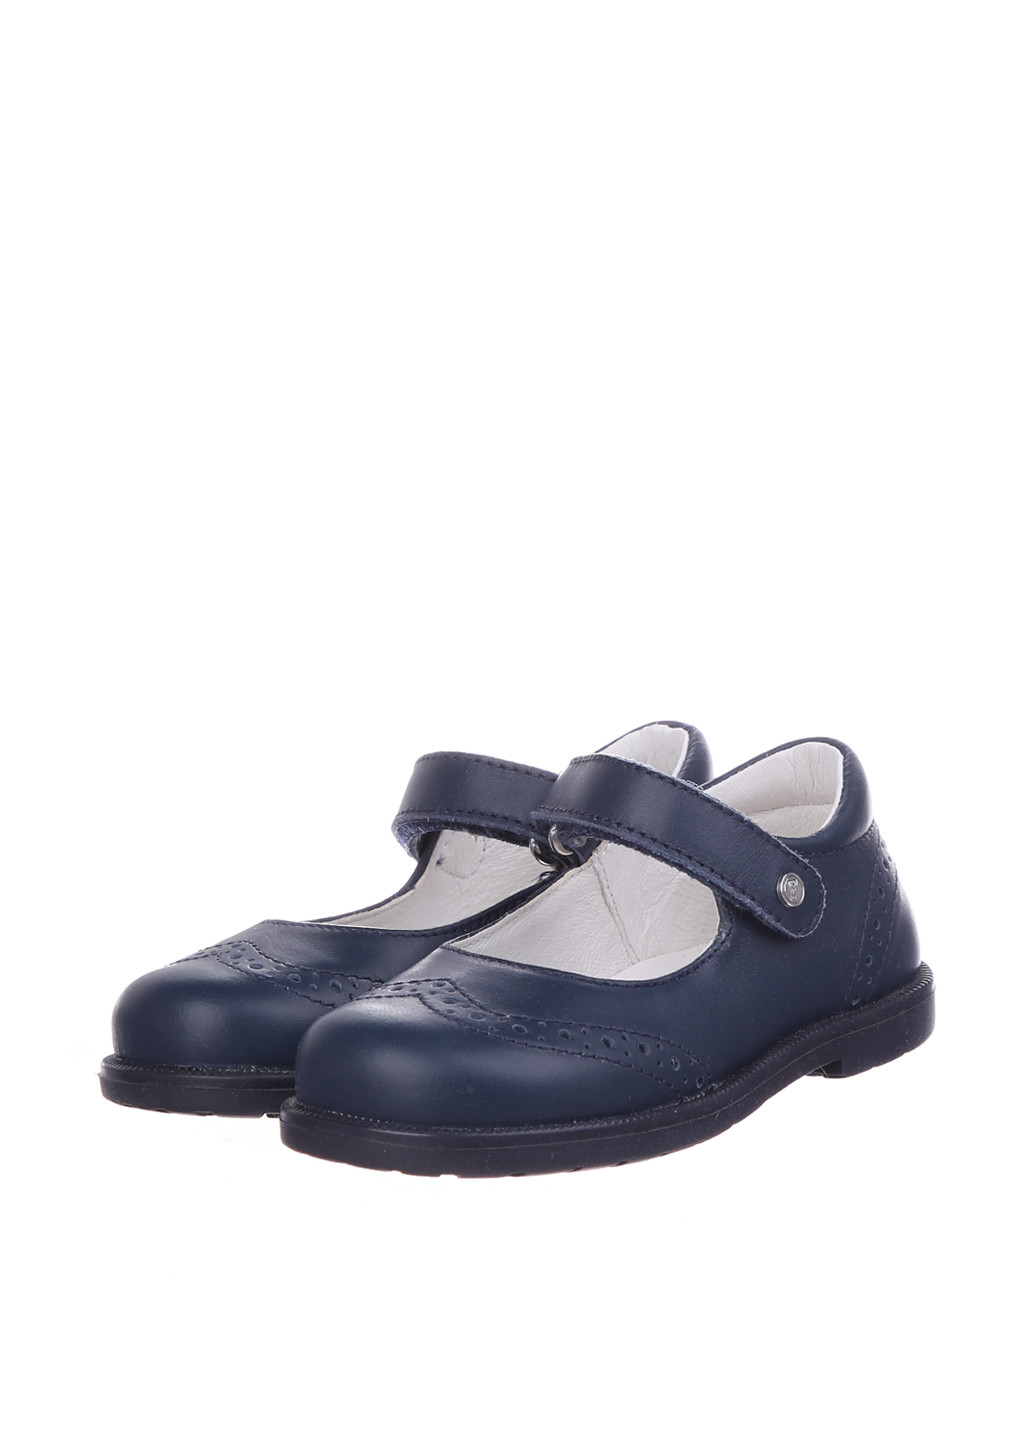 Темно-синие туфли на низком каблуке Falcotto